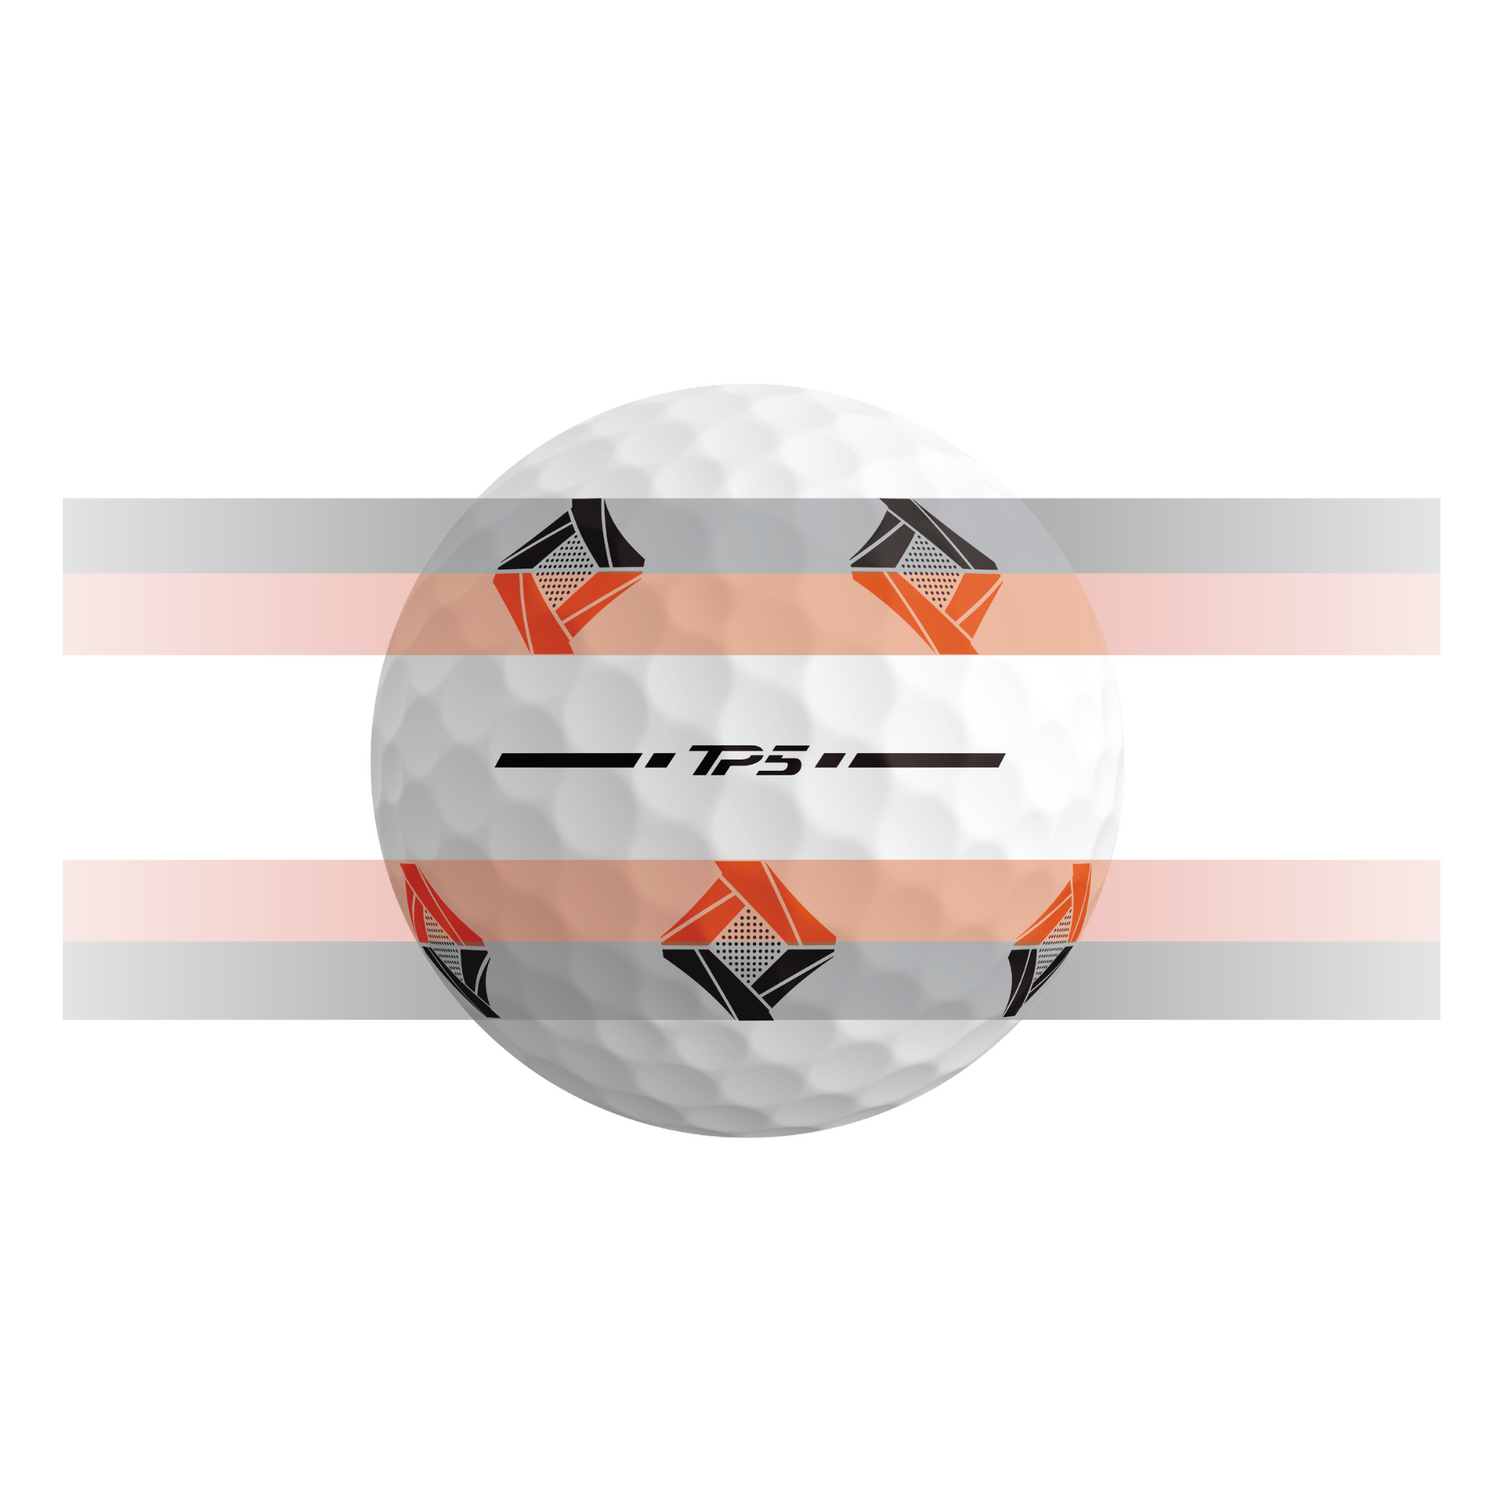 TaylorMade TP5 Pix 3.0 Golf Balls 2024 - White   